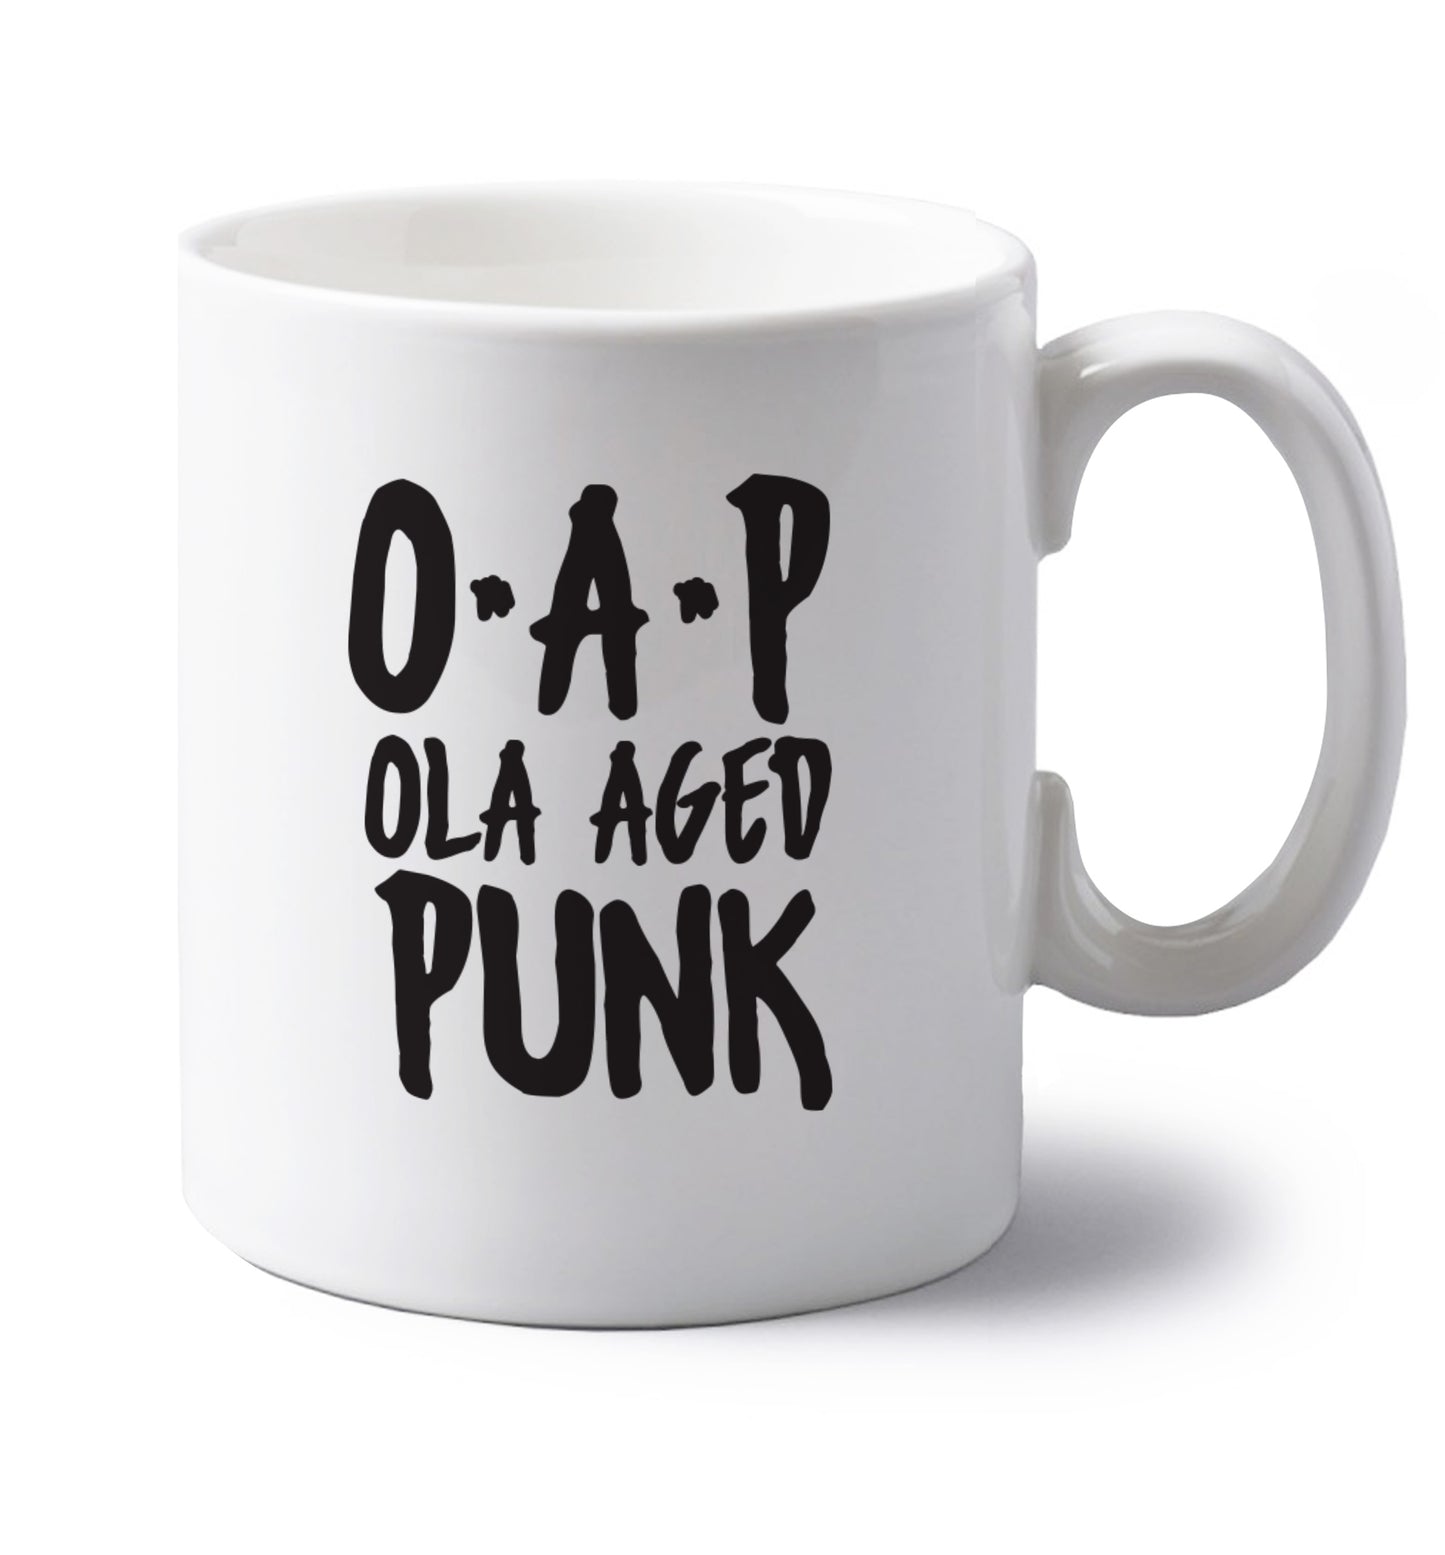 O.A.P Old Aged Punk left handed white ceramic mug 